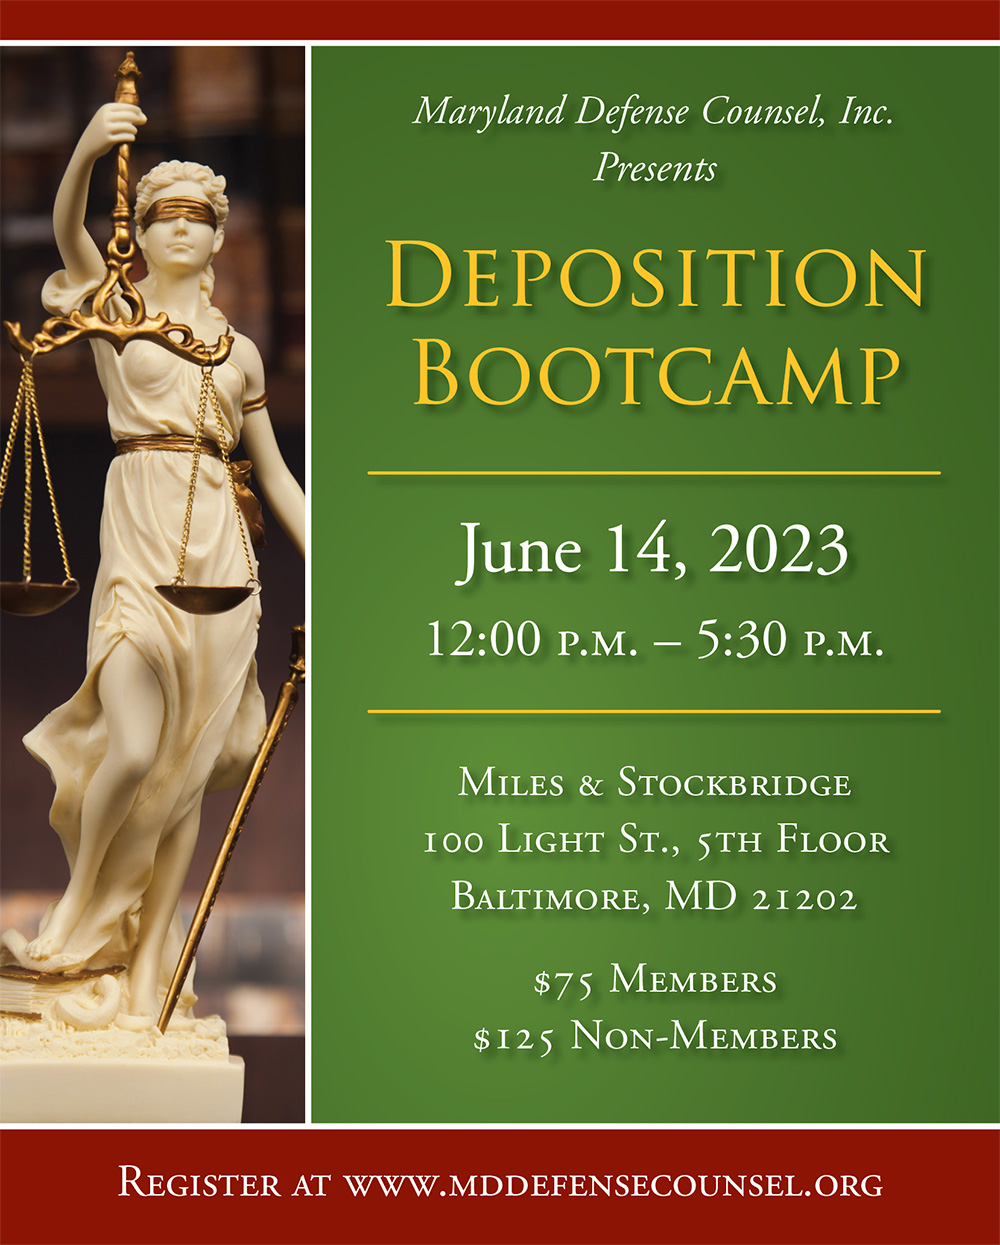 MDC Deposition Bootcamp: June 14, 2023